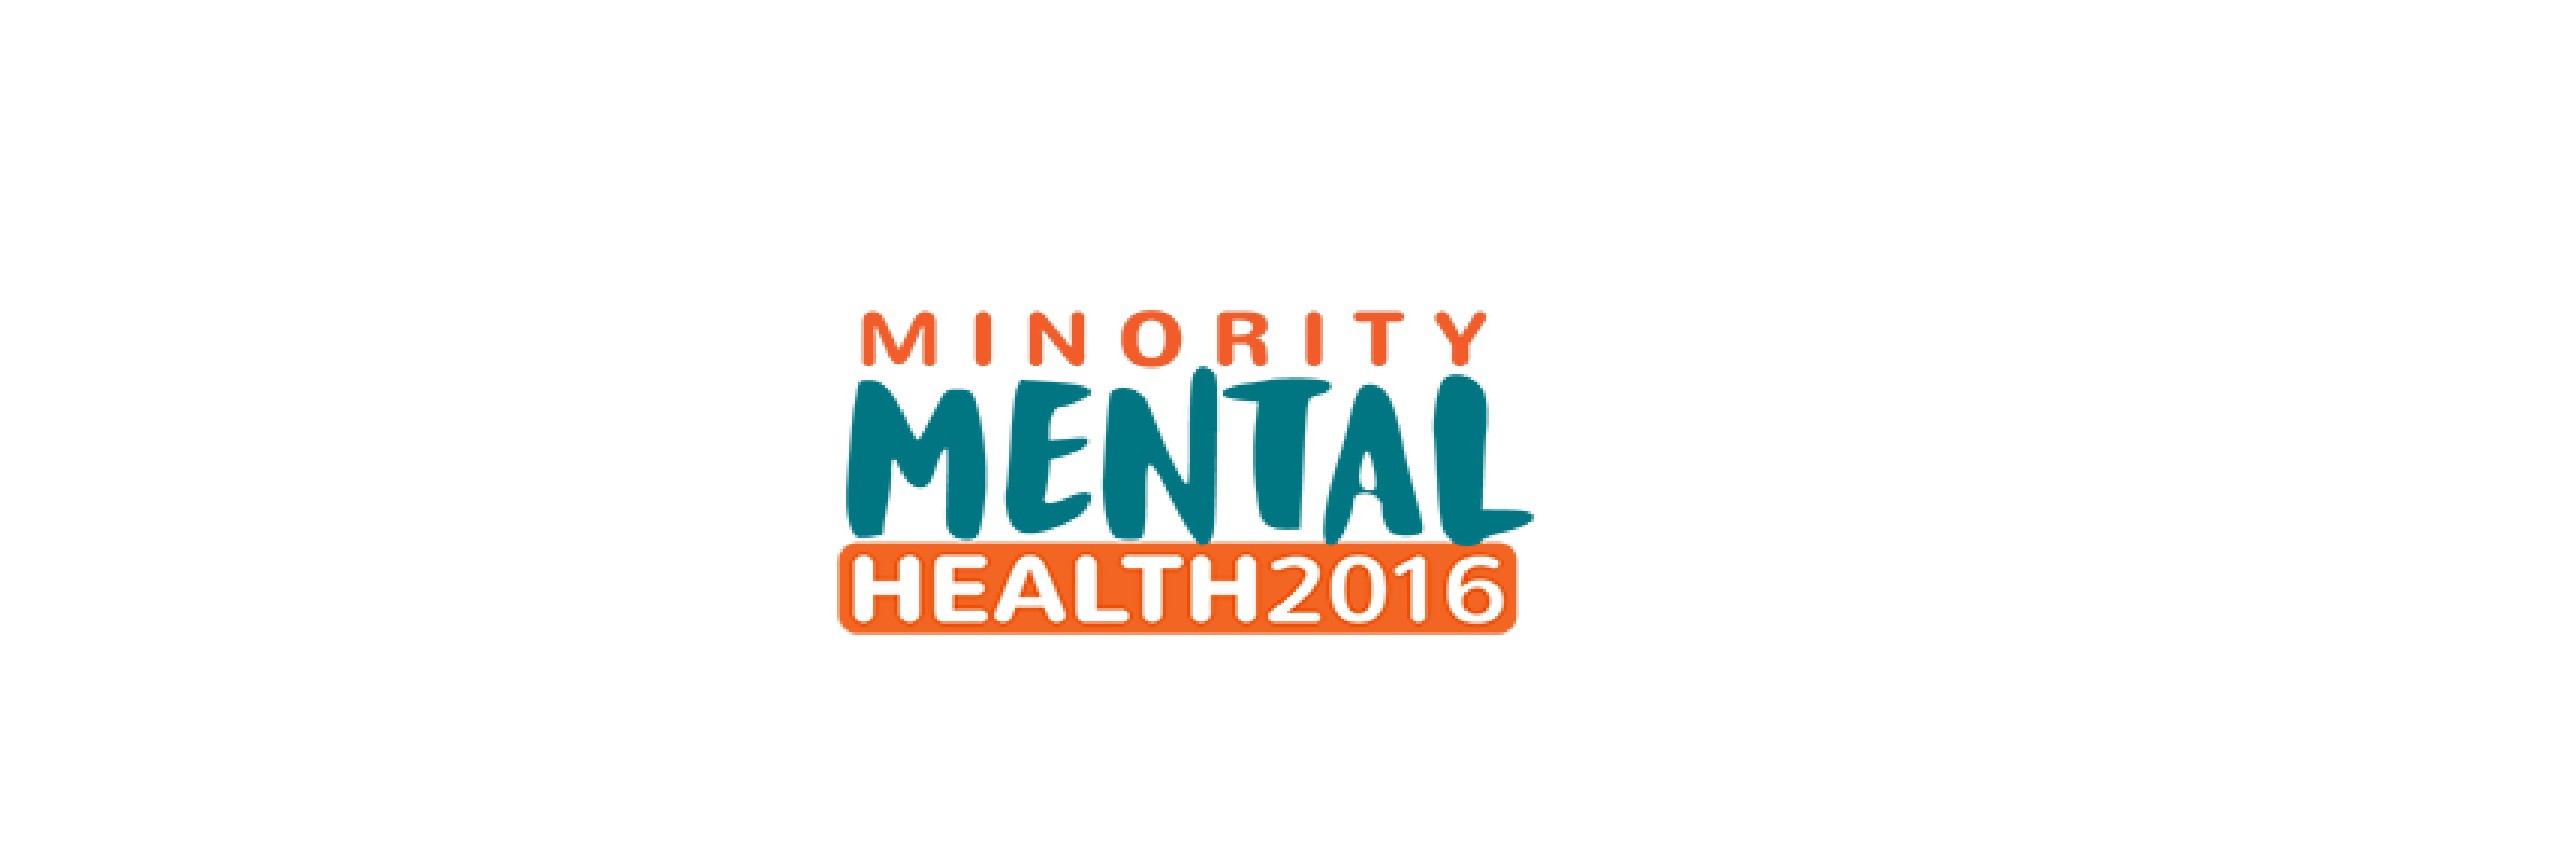 Minority Mental Health 2016